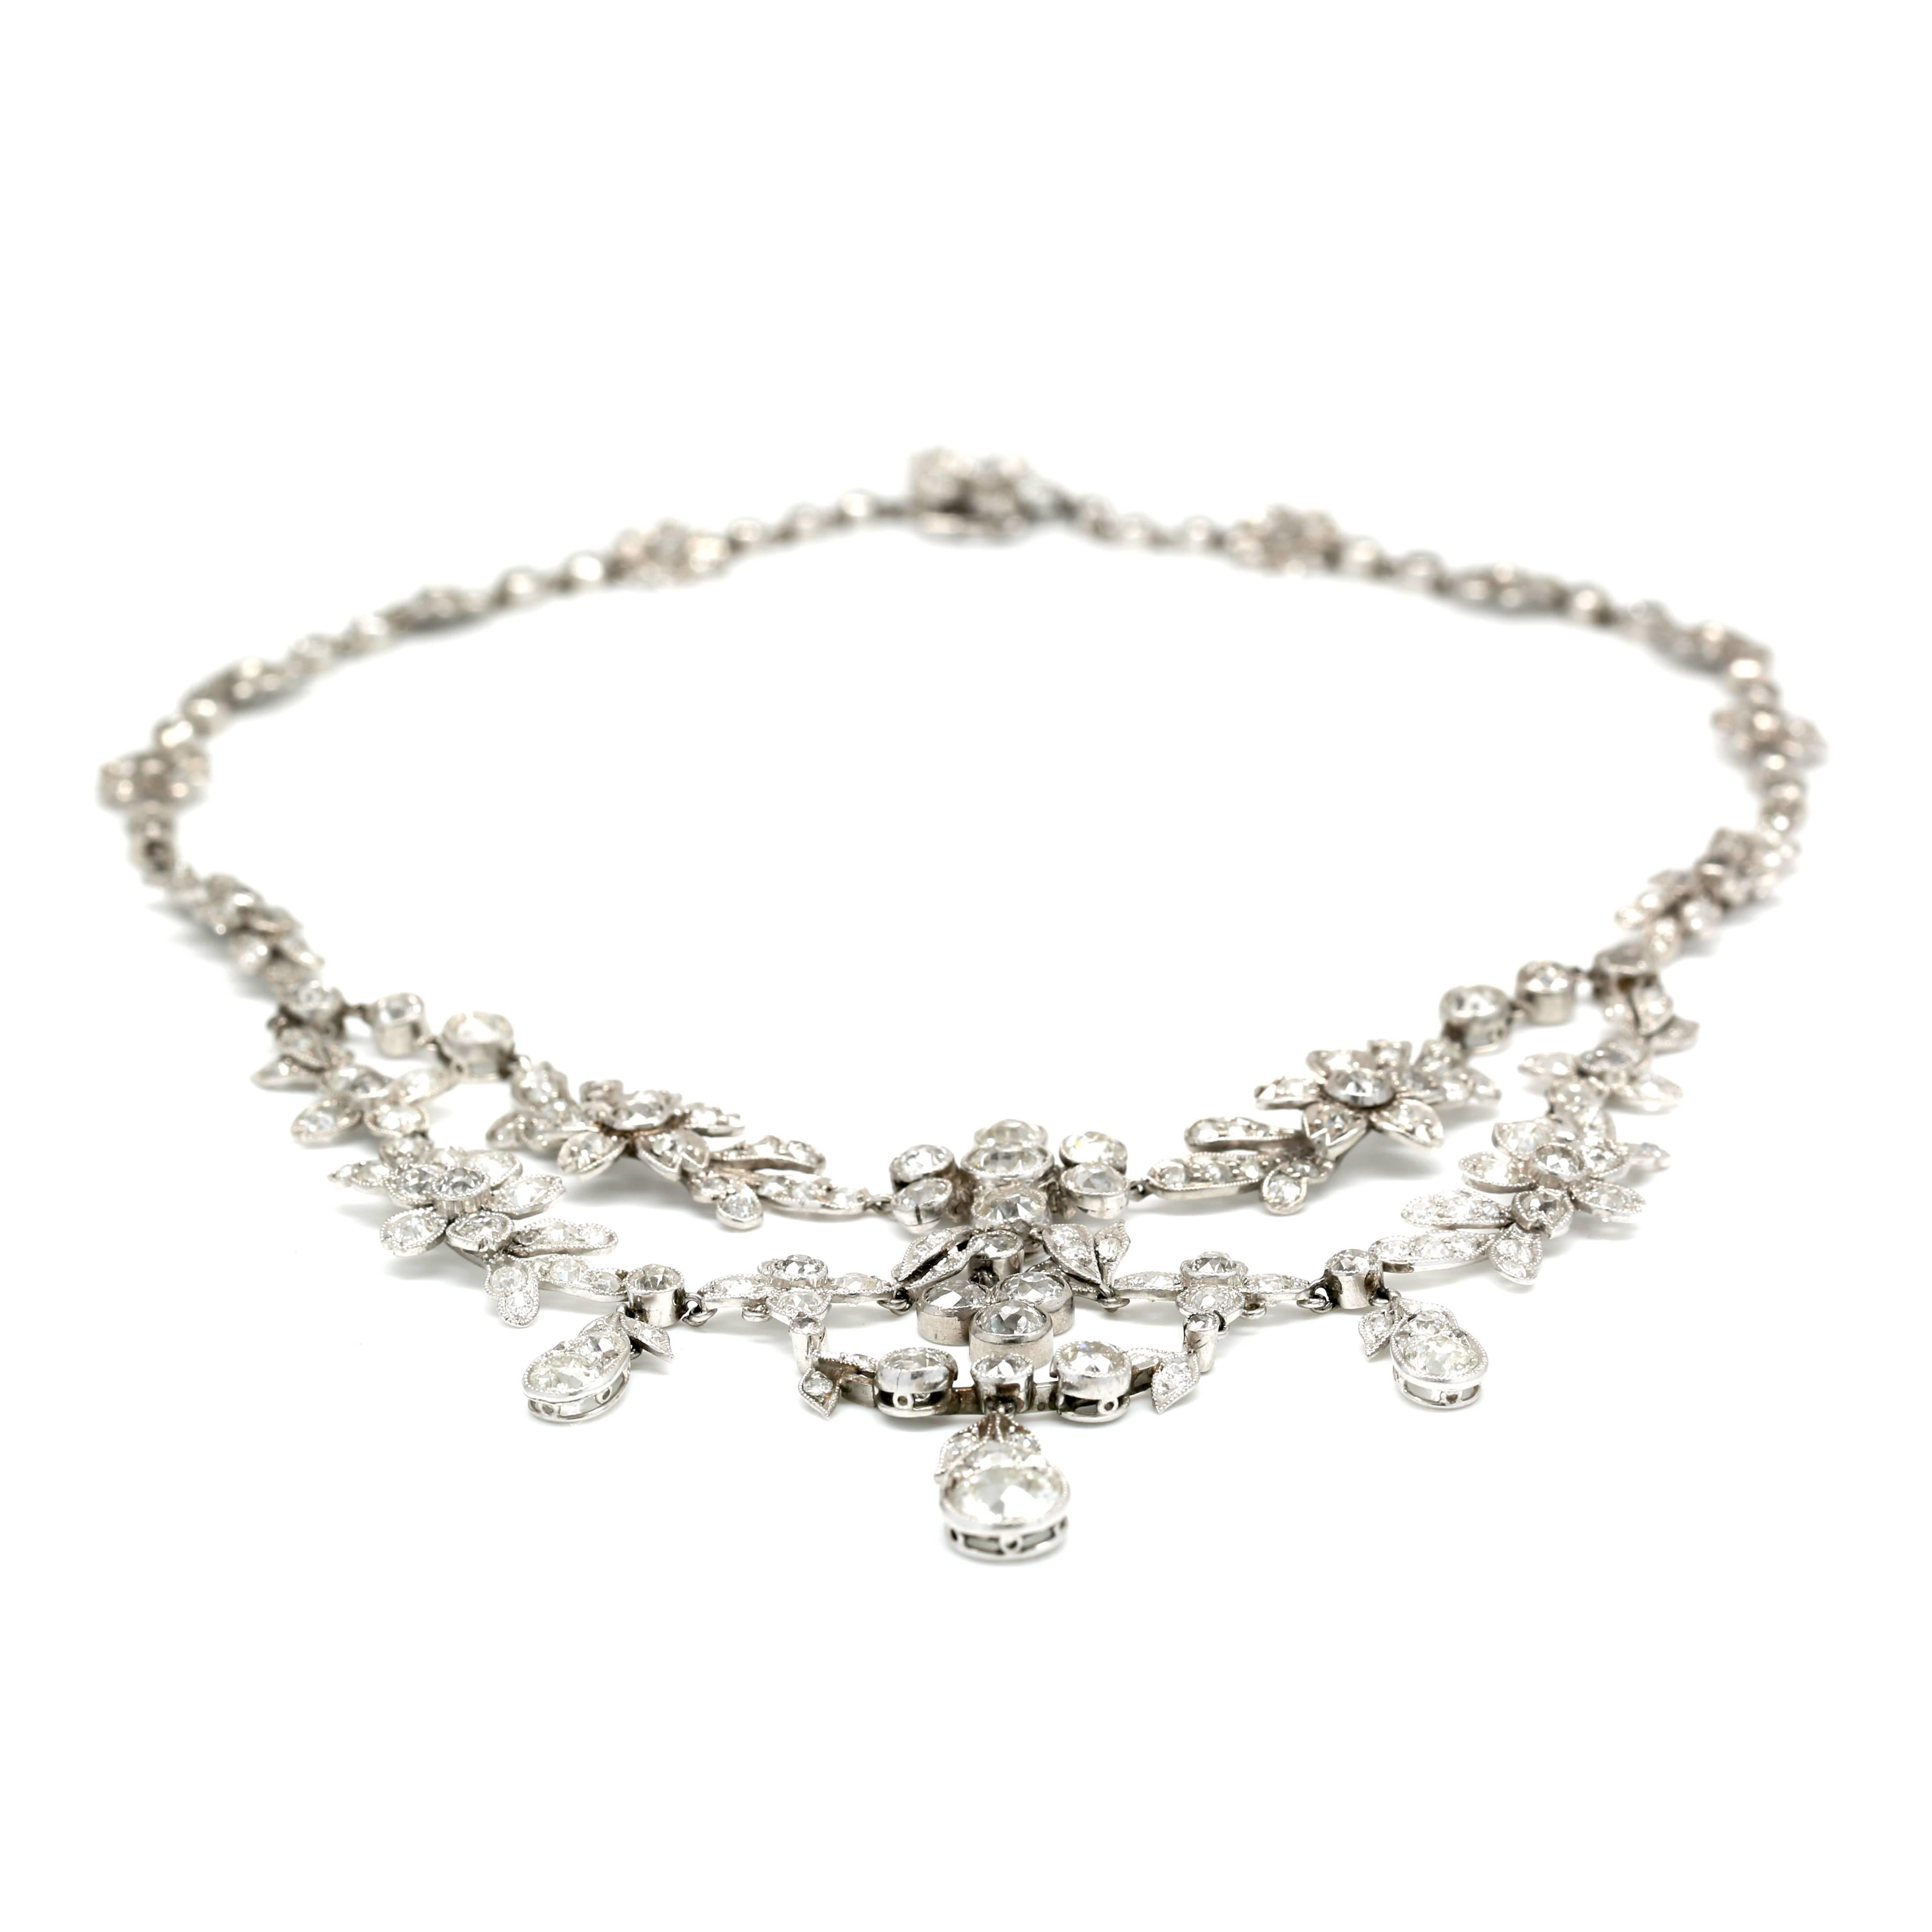 Spectacular Art Deco Necklace Featuring 30.00 Carats of Beautiful European Cut Diamonds E-G Color VS1-SI1 Clarity.